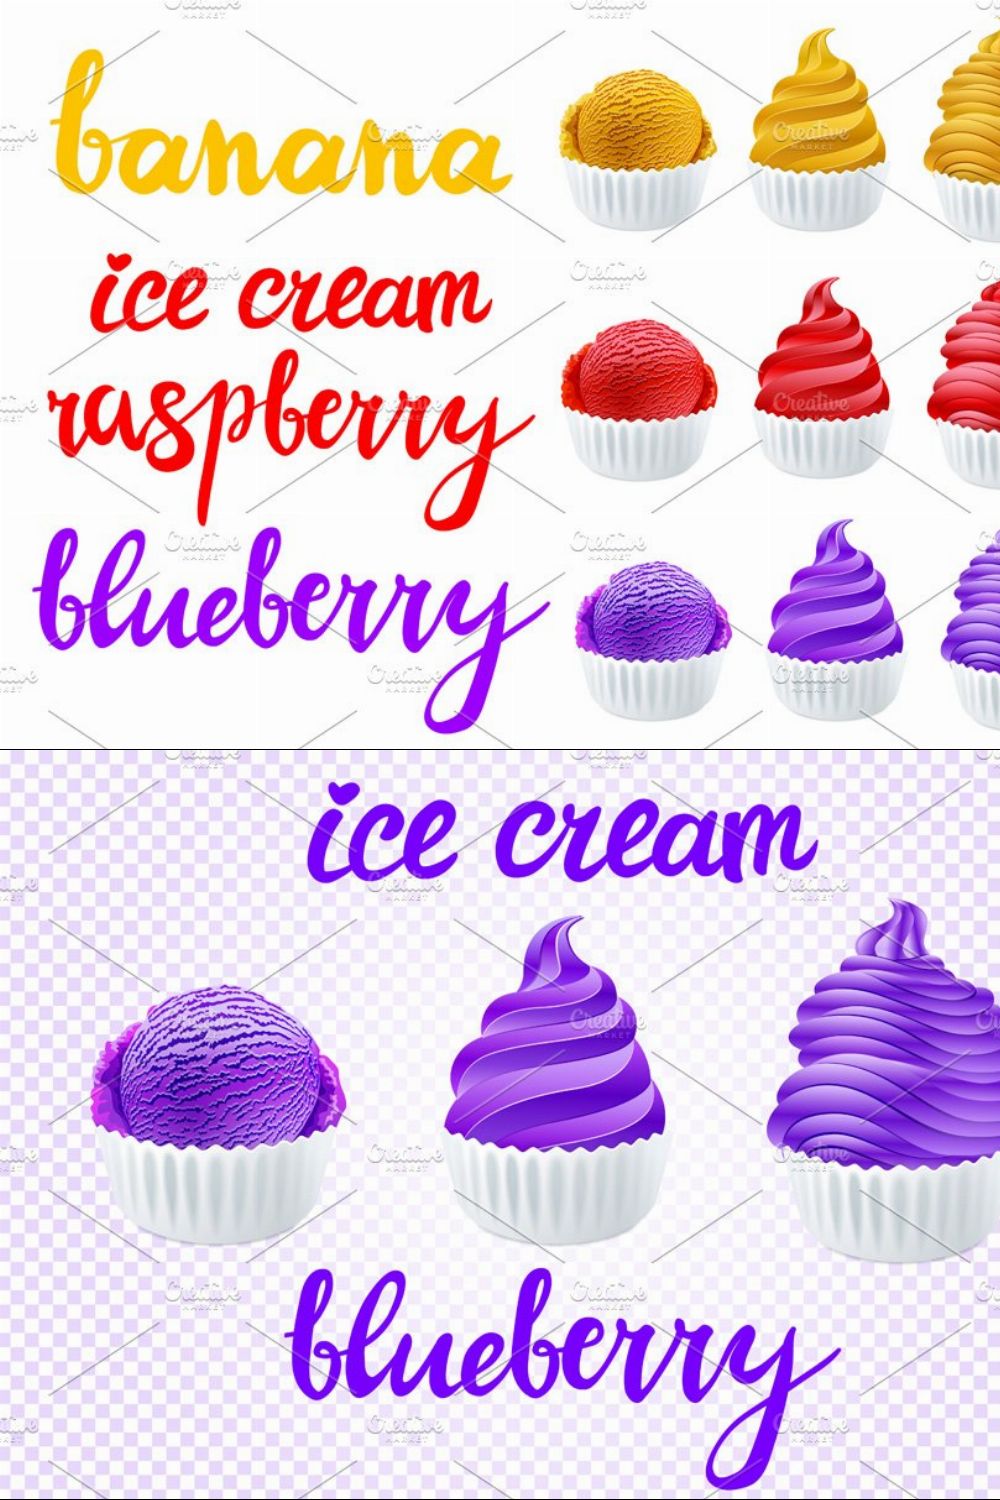 banana raspberry blueberry ice cream pinterest preview image.